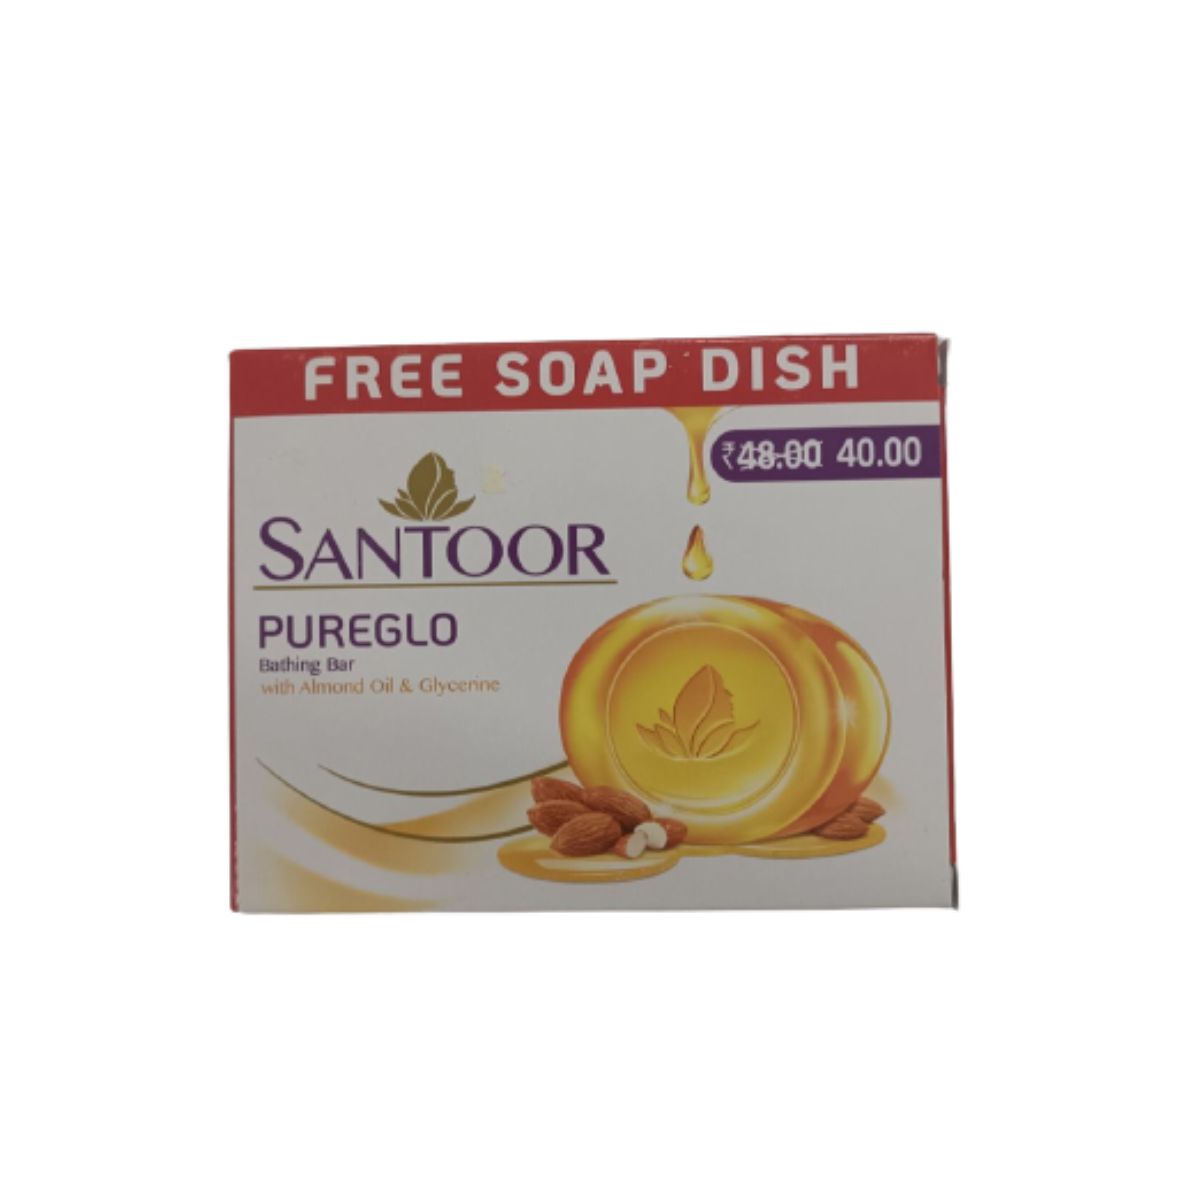 Santoor Pureglo Bathing Bar With Almond Oil & Glycerine - Free Soap Dish